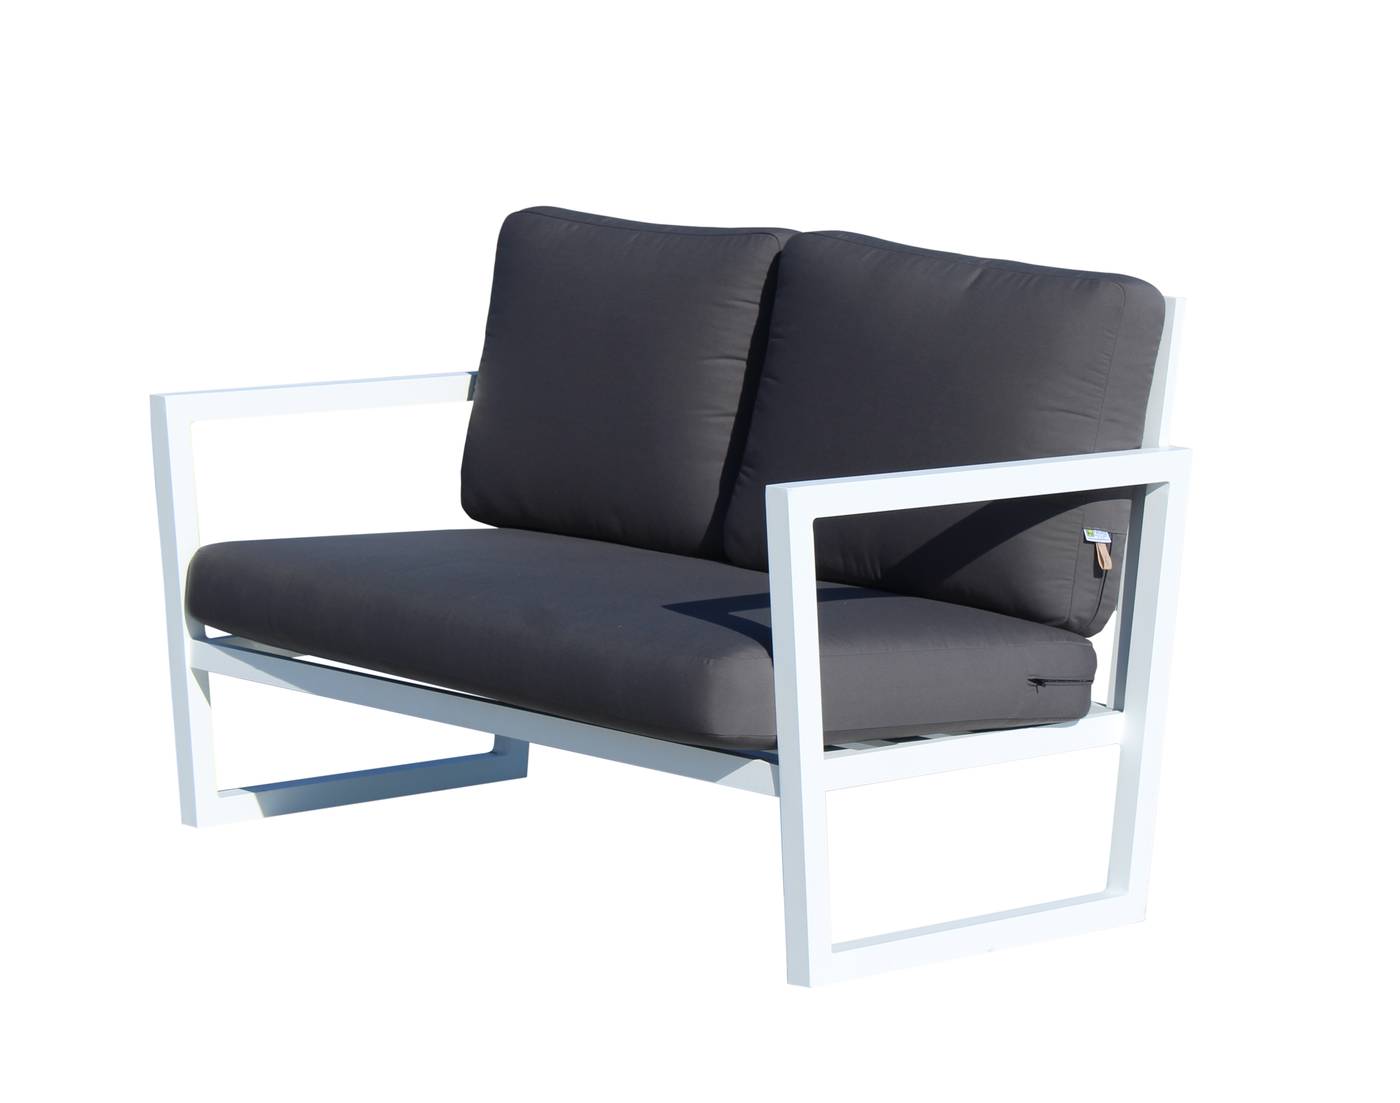 Set Aluminio Alpine-9 - Conjunto de aluminio para exterior: sofá 2 plazas + 2 sillones + mesa de centro + 2 taburetes. Disponible en color blanco, antracita, champagne, plata o marrón.